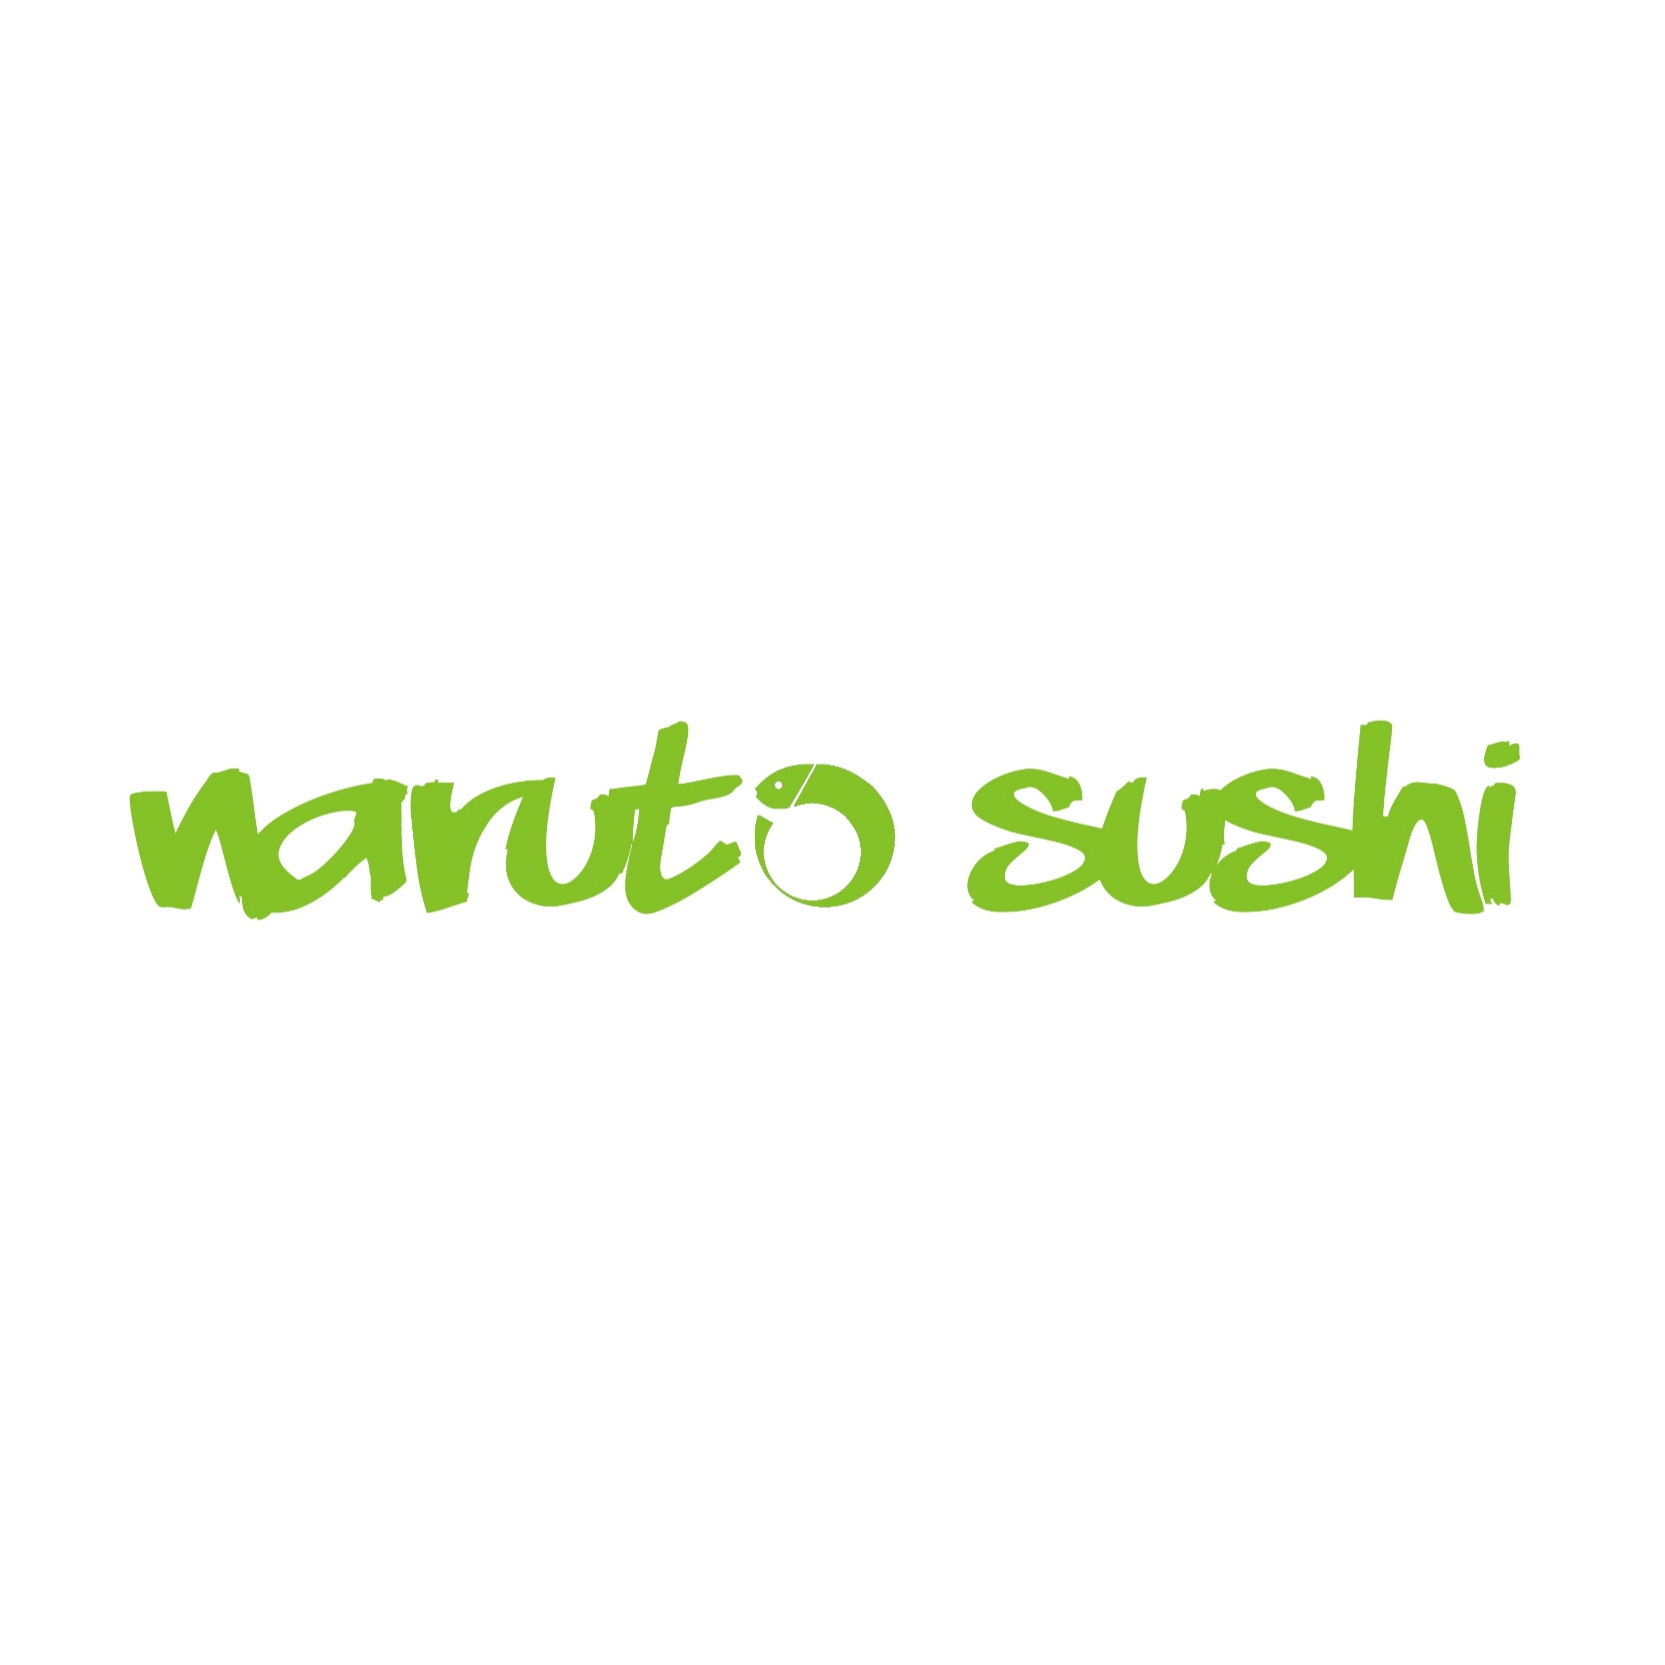 Naruto Sushi: キッチンヘルプ/寿司シェフ募集（パートタイム） - Naruto Sushi Title image